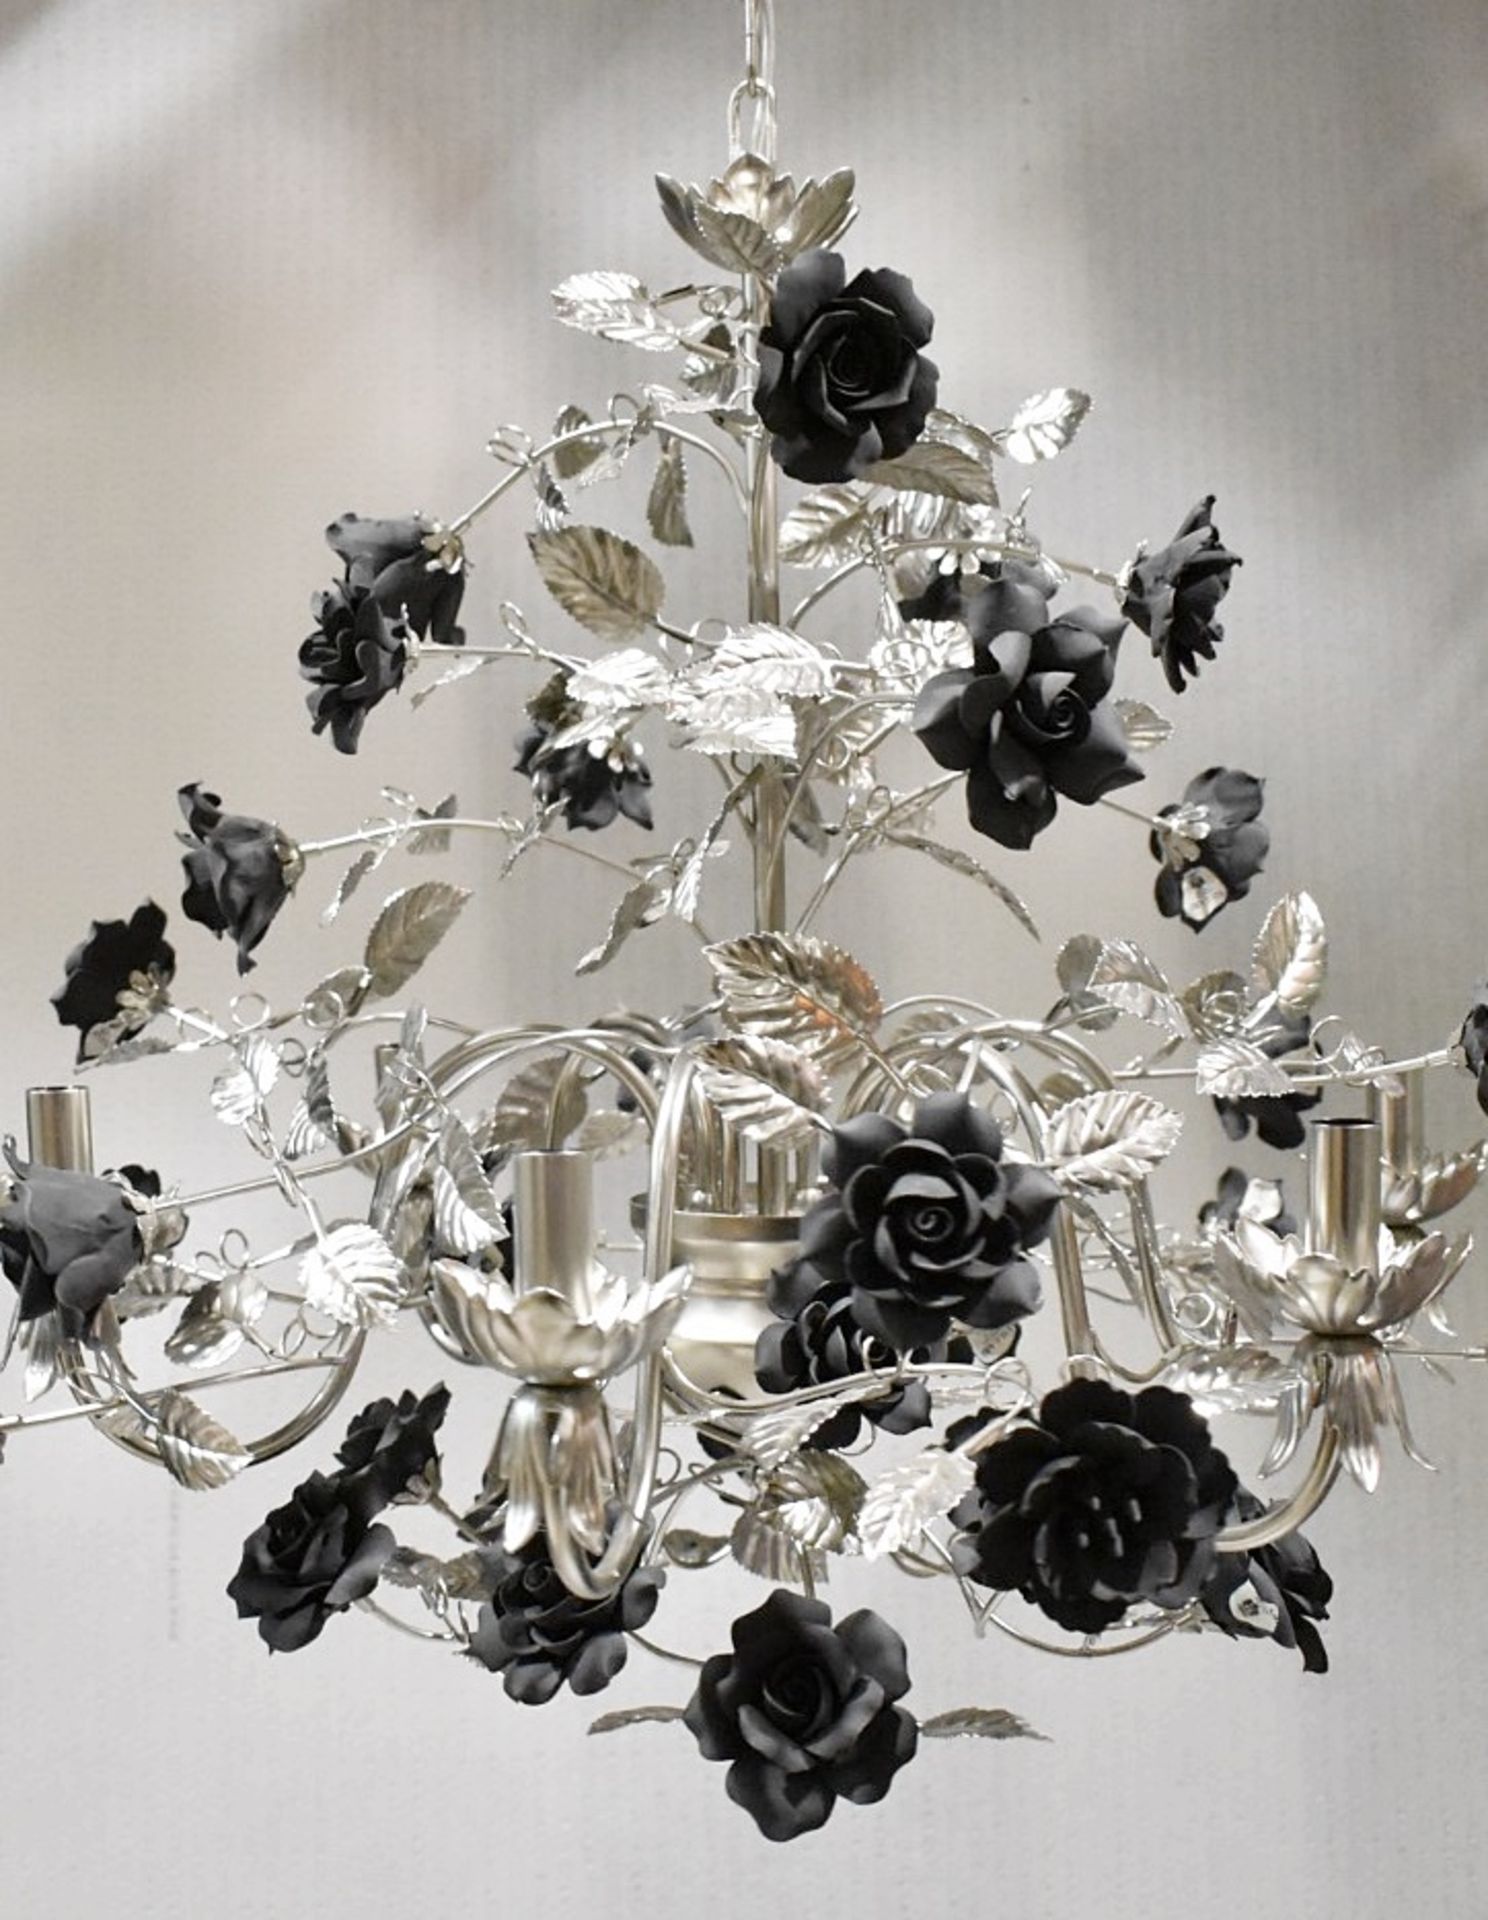 1 x VILLARI Opulent Platinum Plated 6-Arm Luxury Chandelier With Porcelain Decoration - RRP £12,000 - Image 3 of 17